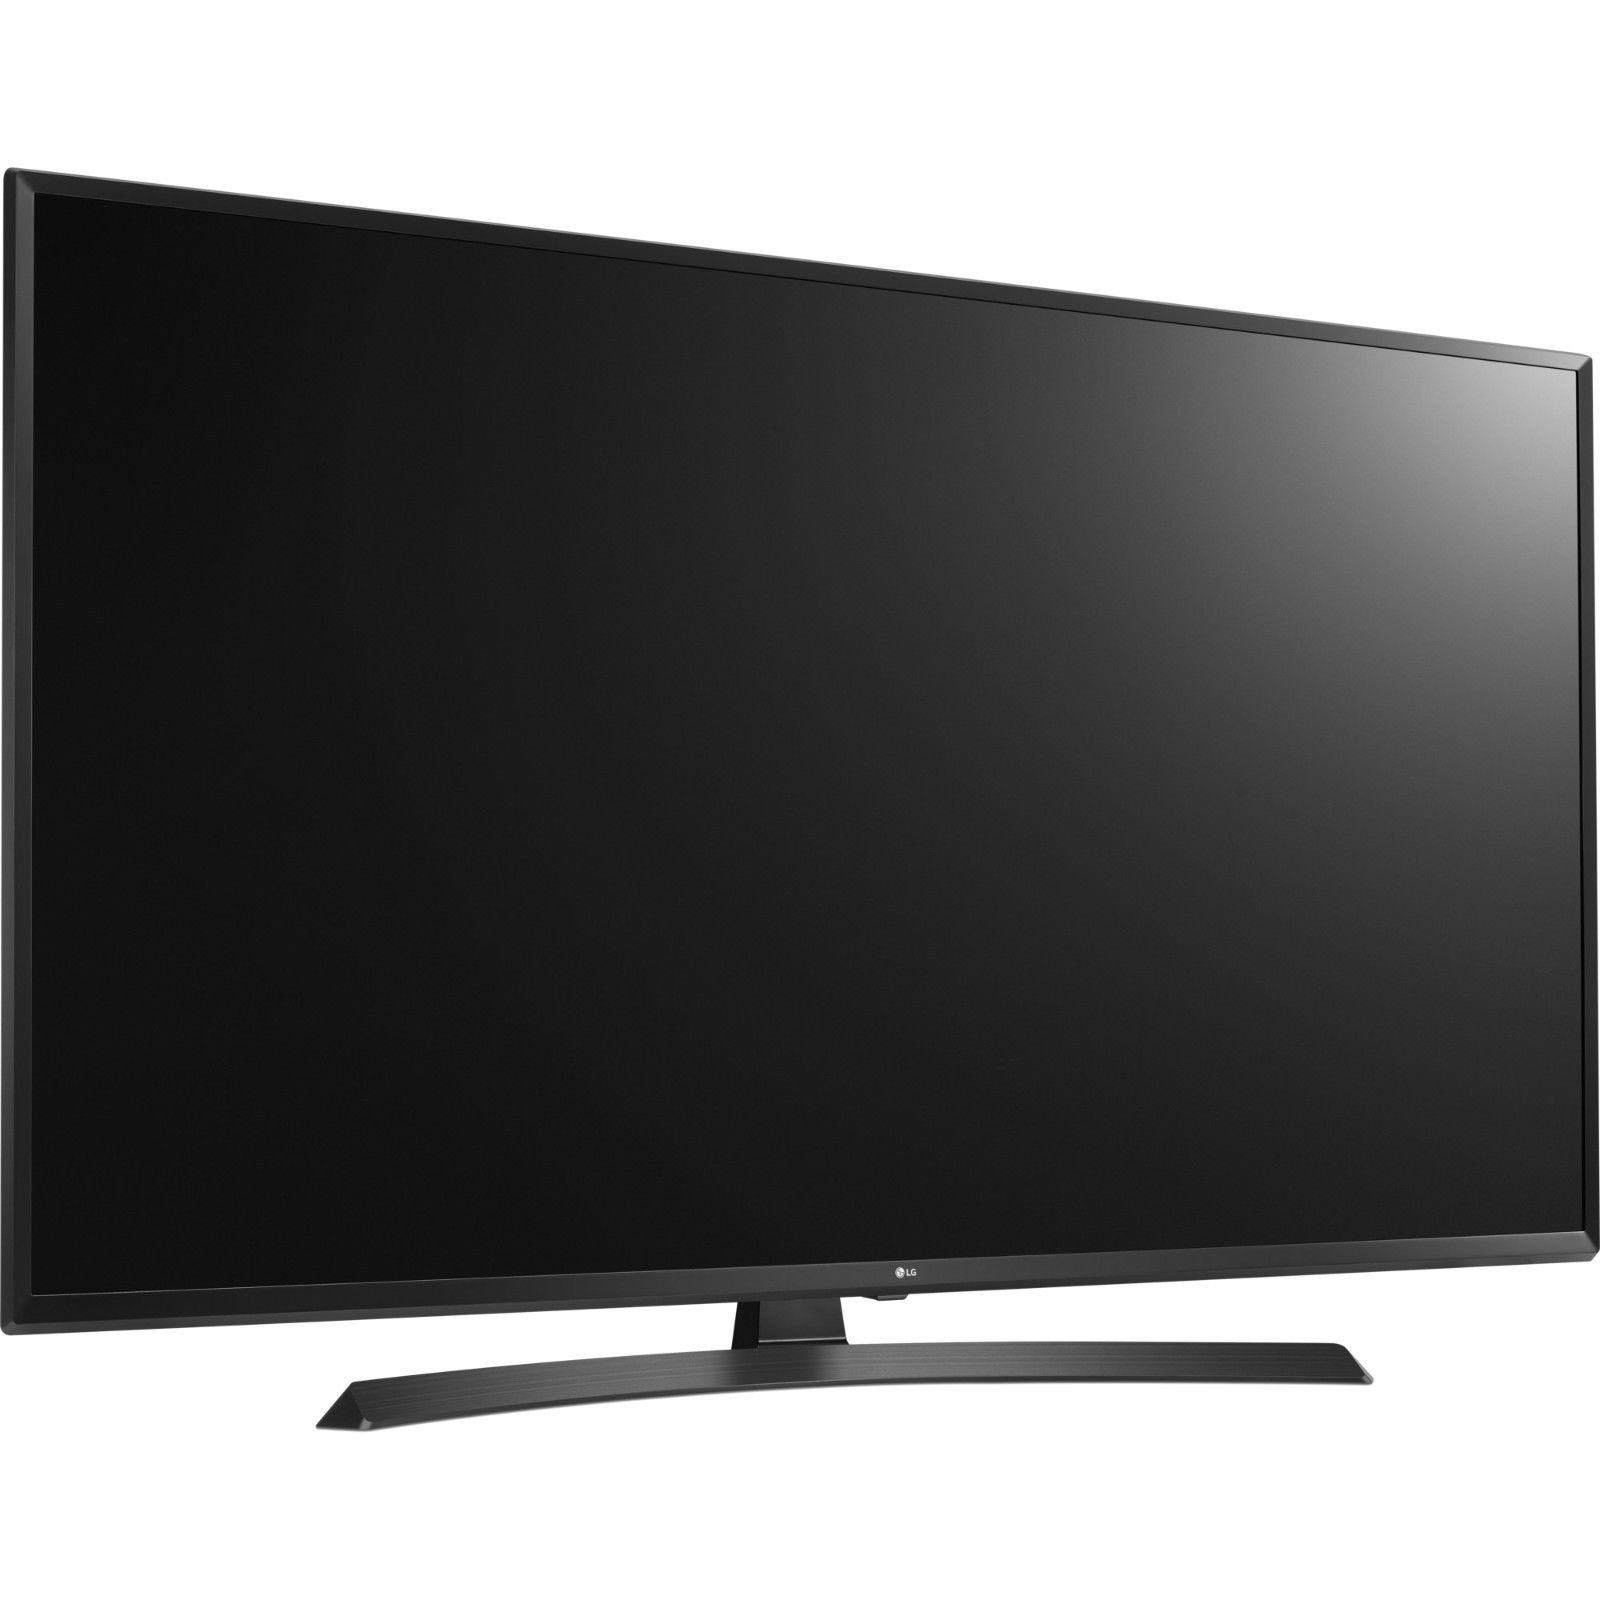 LG 49UJ635V 49 Zoll UHD LED Fernseher Smart TV Wlan Triple Tuner 1600 PMI